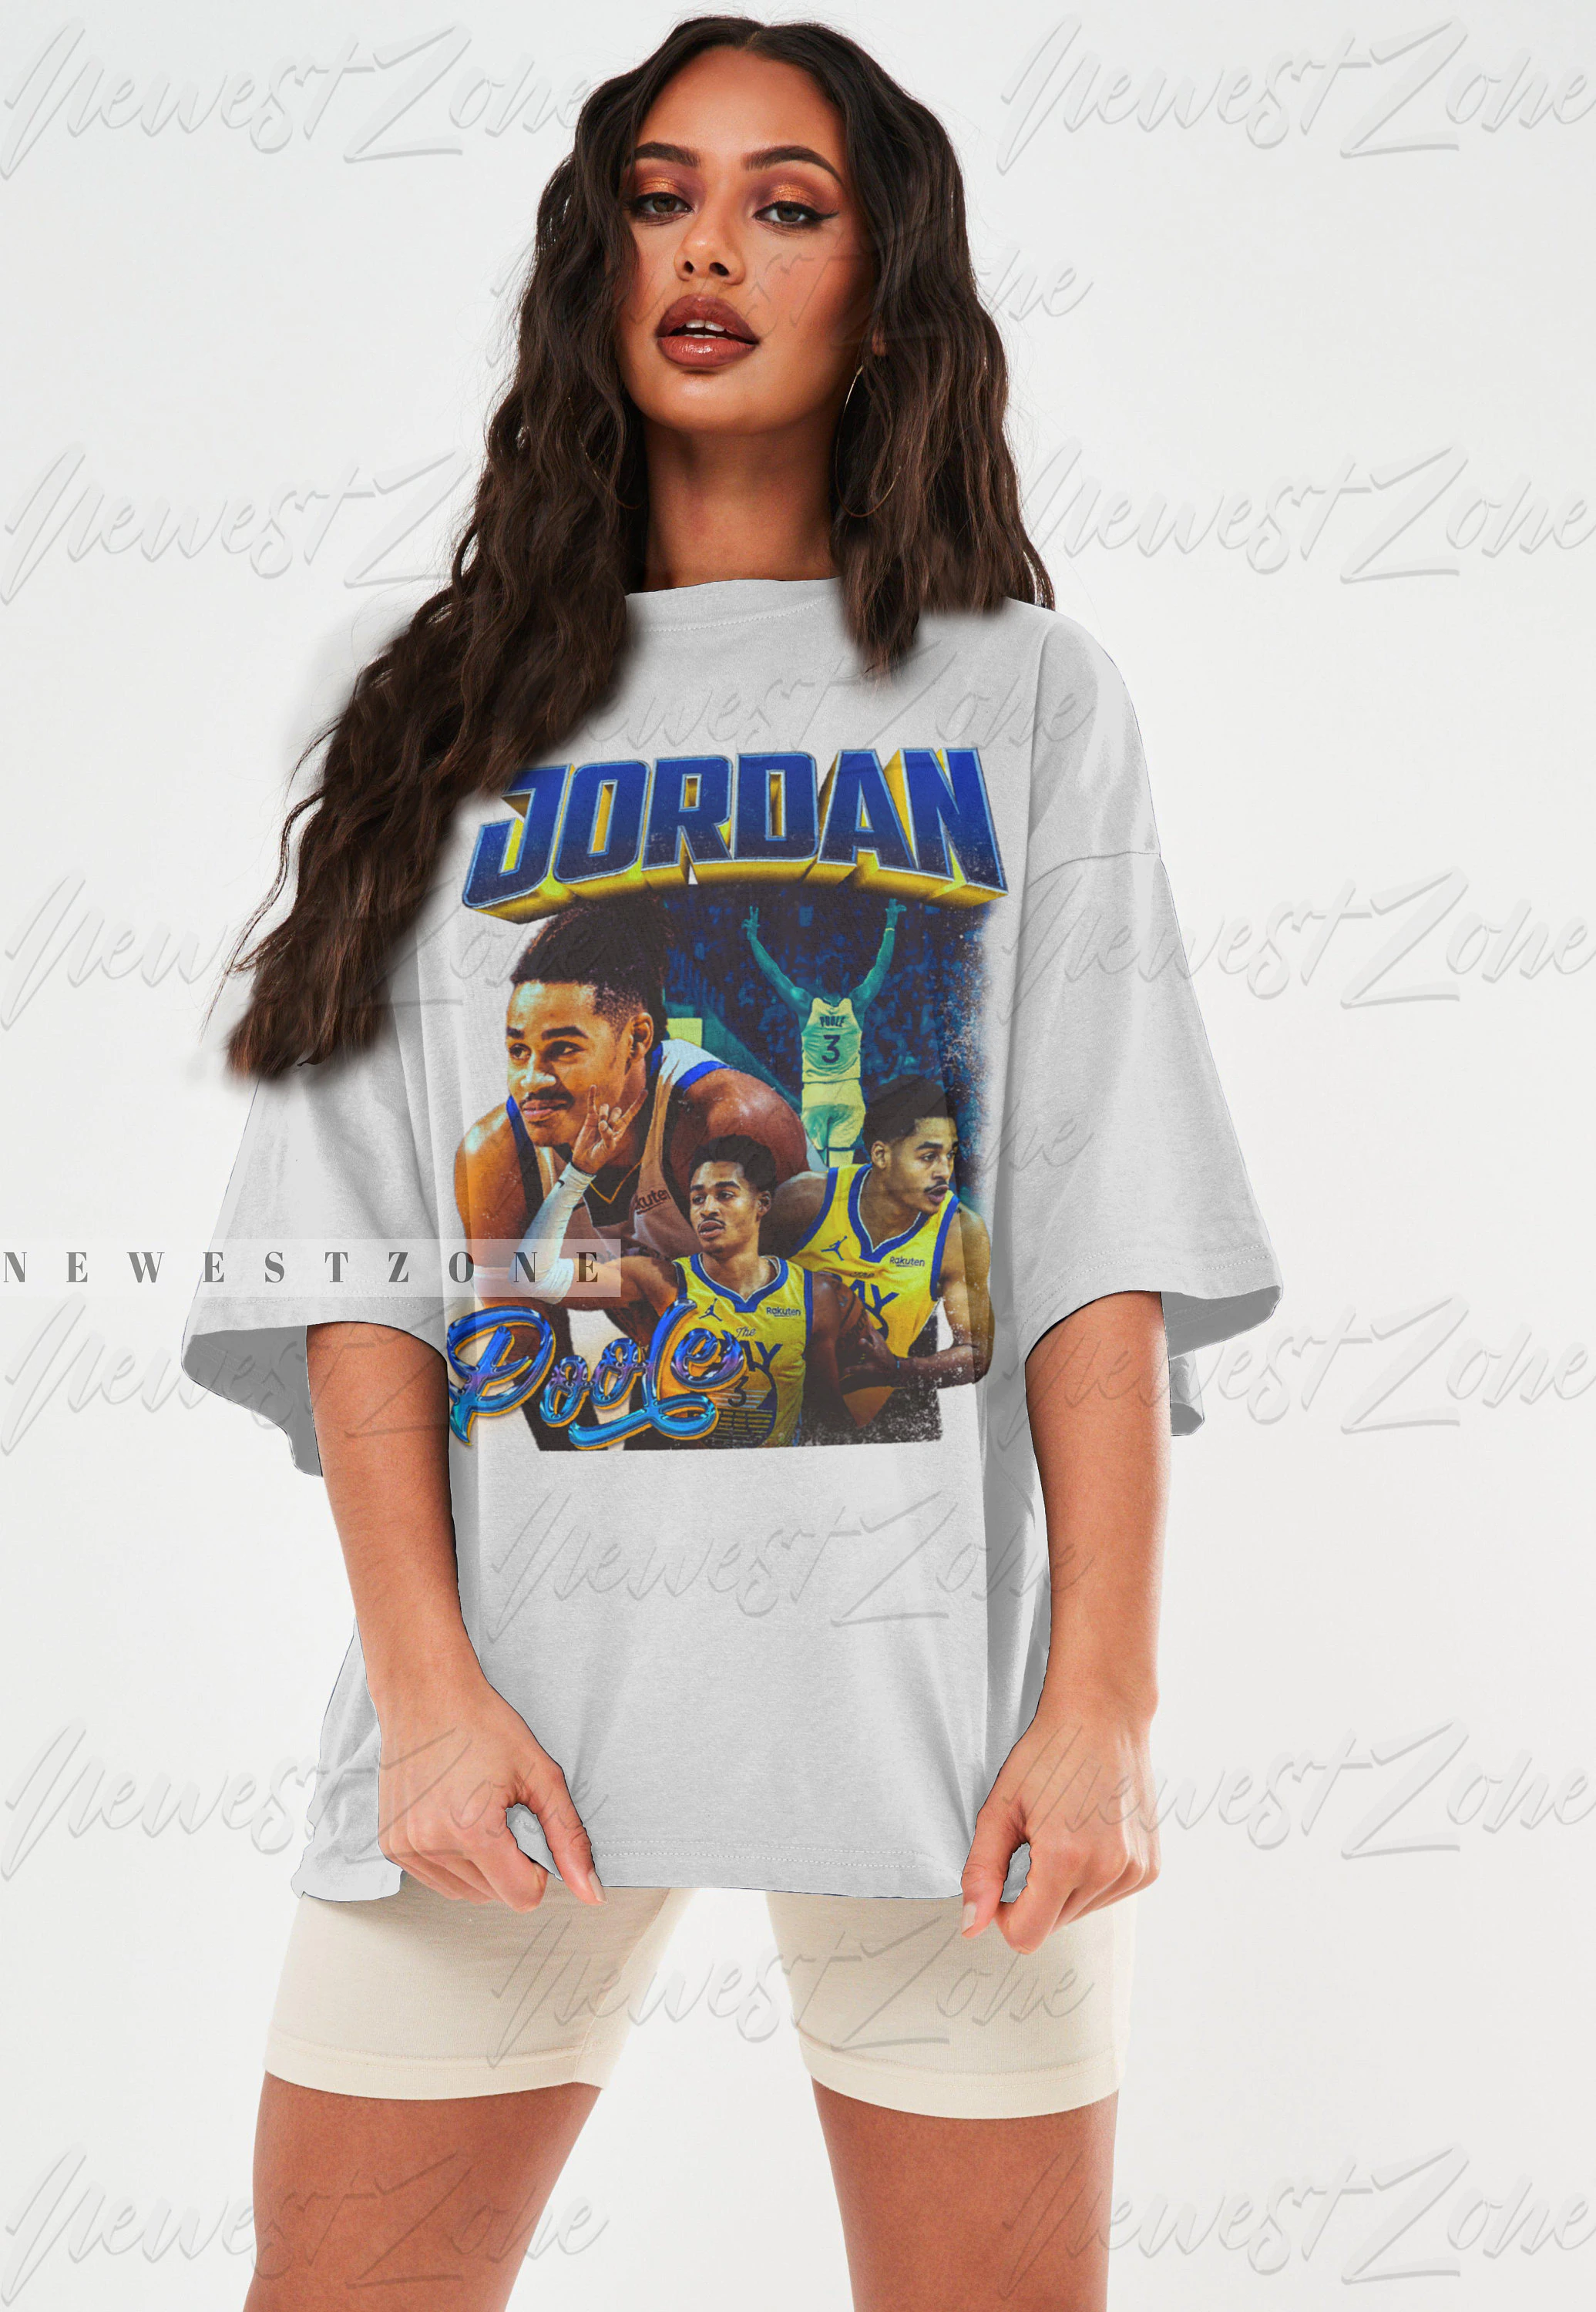 Jordan Poole Vintage 90s Style Basketball Shirt